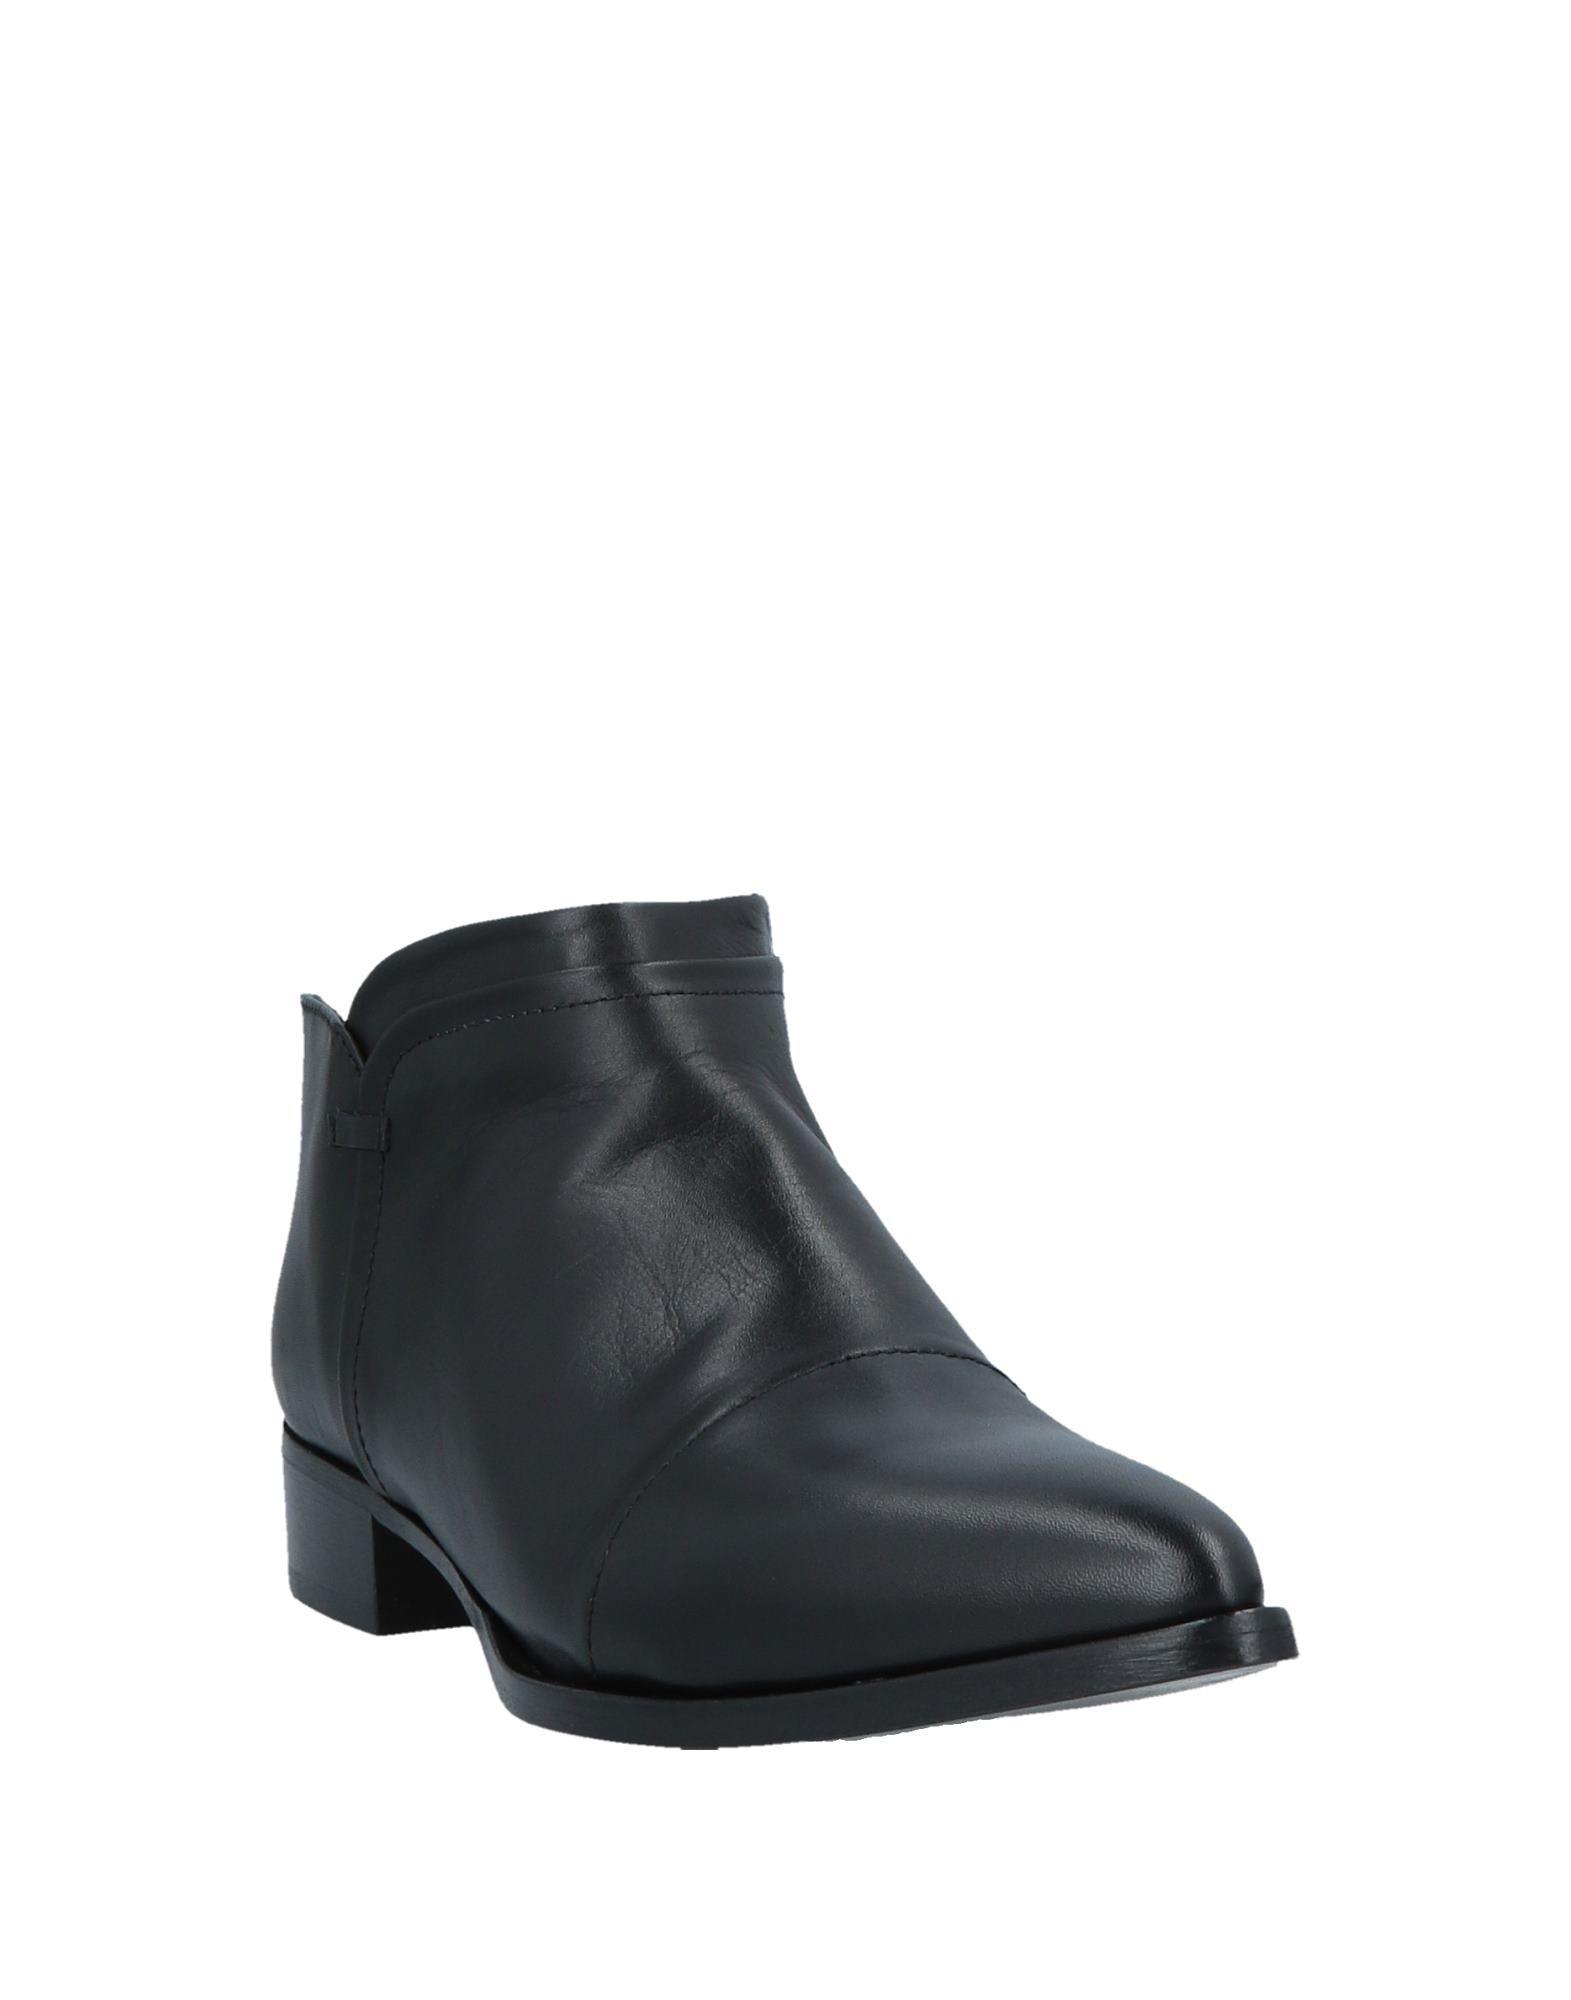 Alberto Fermani Leather Shoe Boots in Black - Lyst